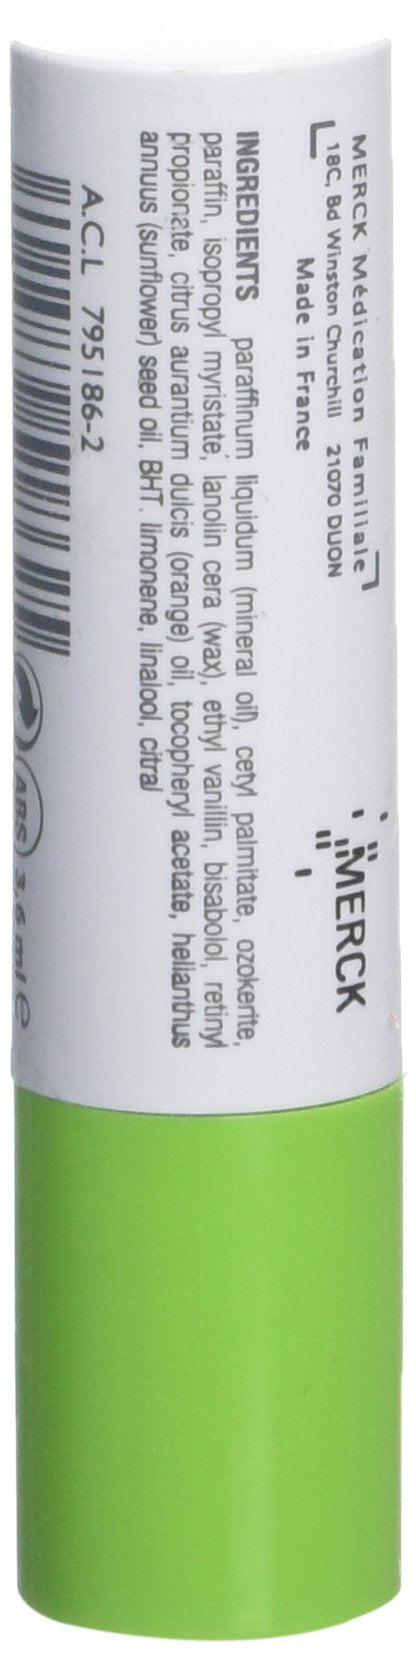 Merck Amilab Lip Balm 3.6ml